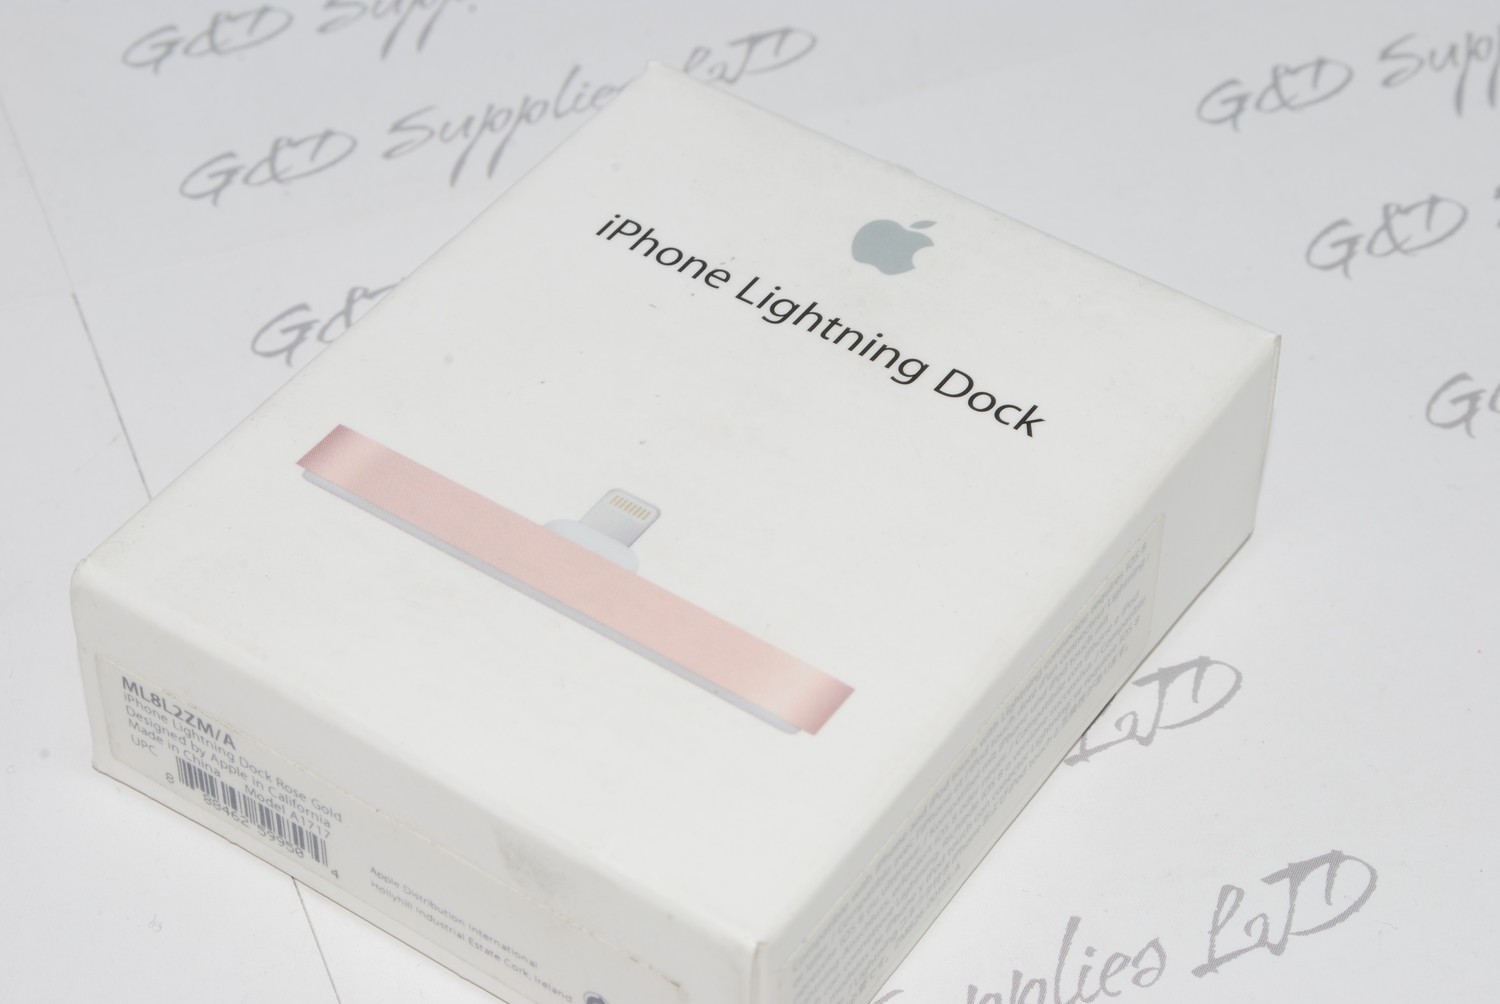 Genuine Official Apple iPhone 6,7,8,8s, X,XS,XR Rose Gold Lightning Dock Station